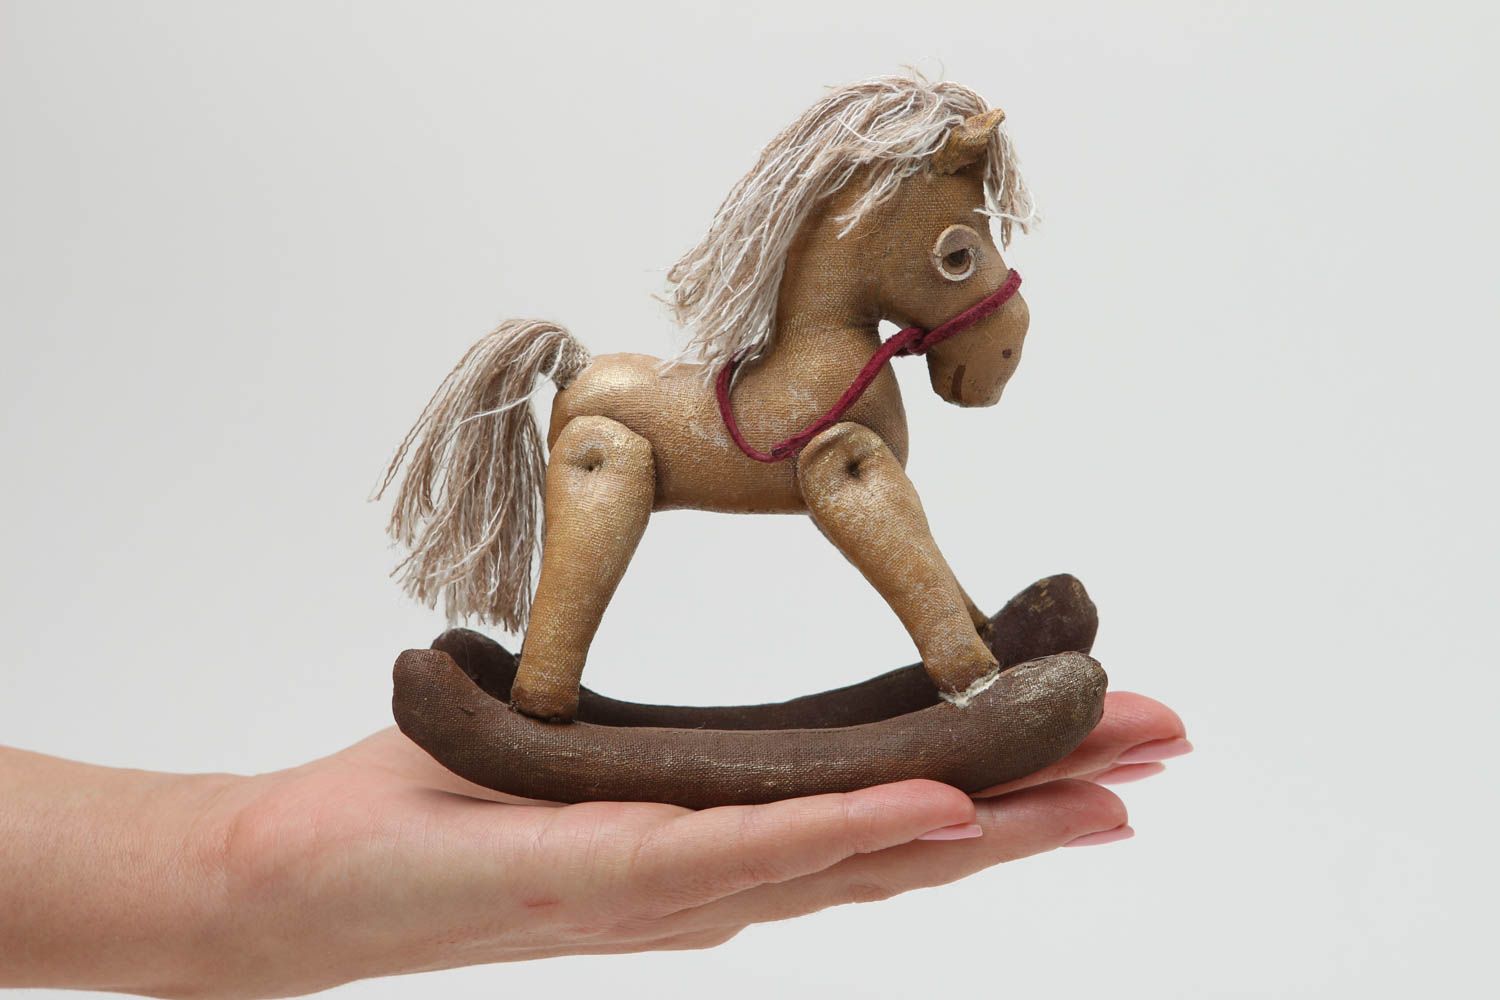 Handmade rocky horse toy decorative toys nursery decor present for child photo 5